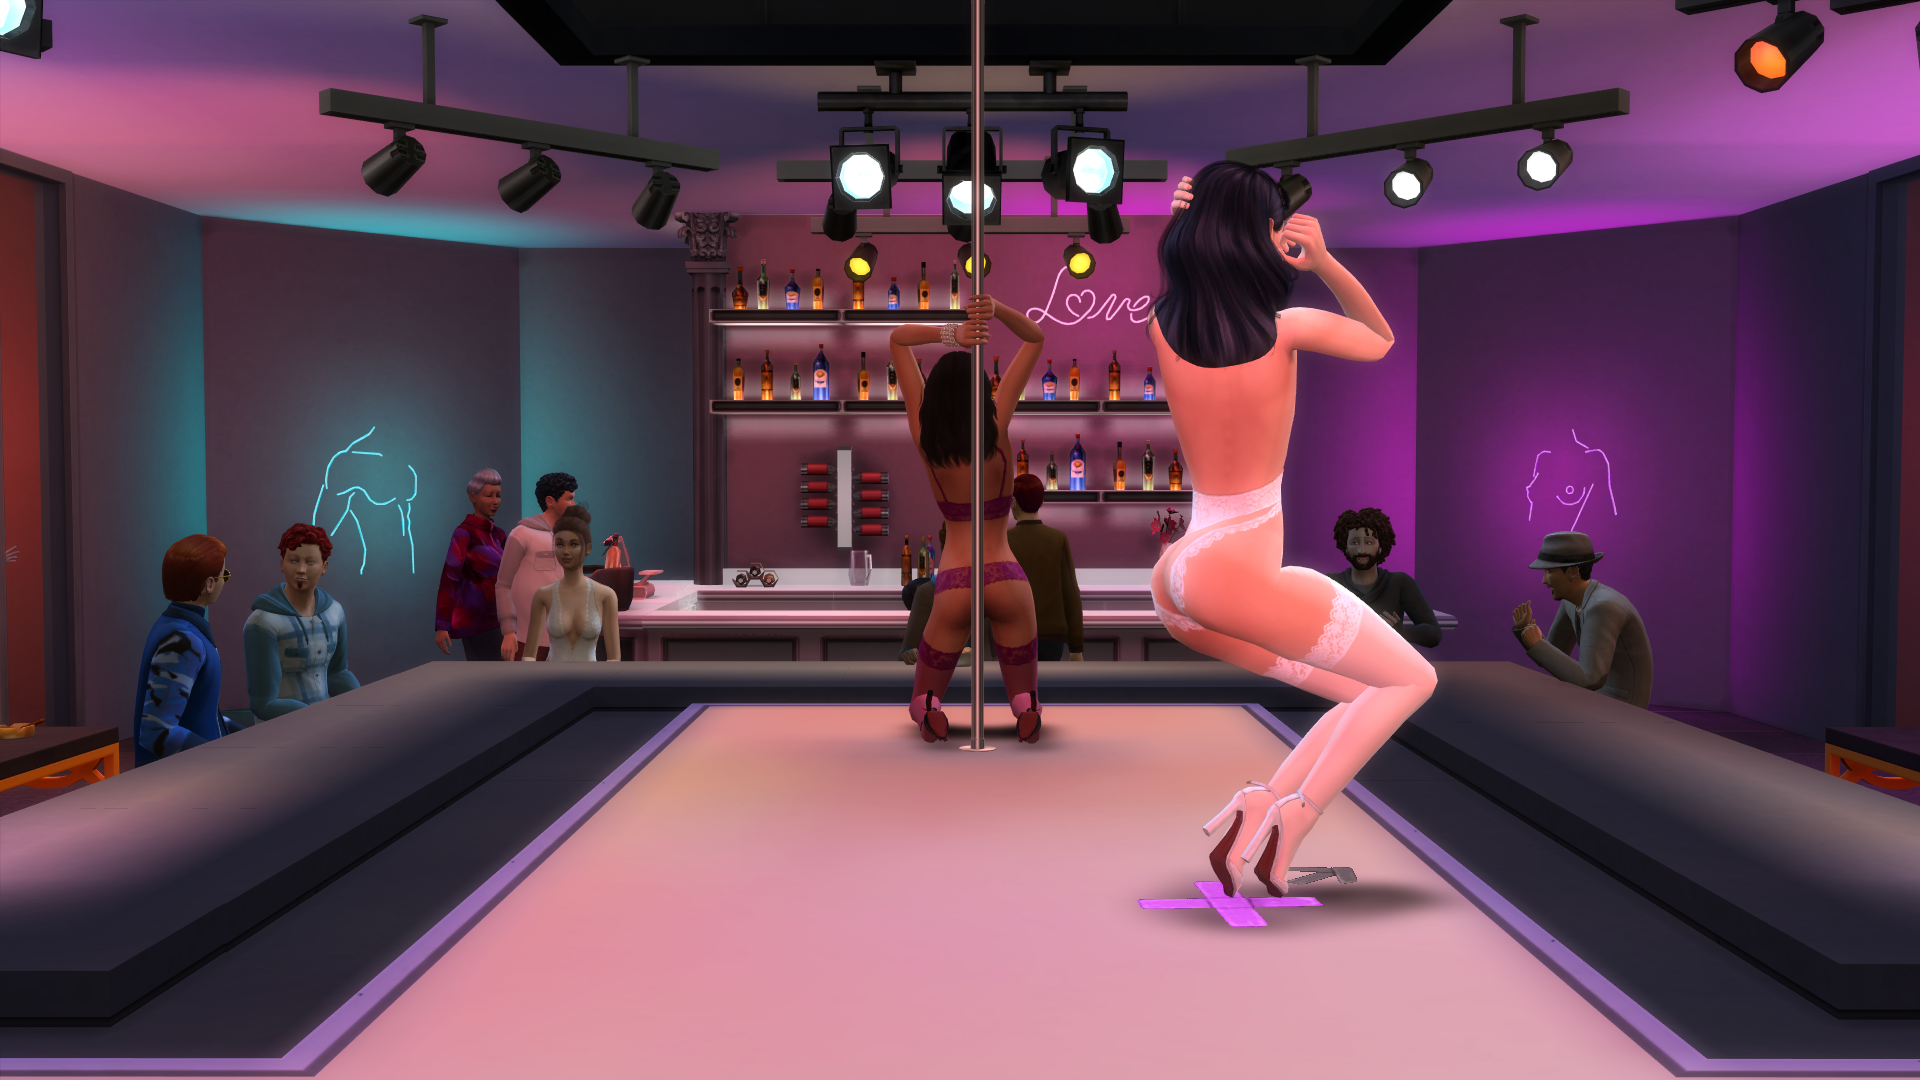 The sims 4 luxury strip club